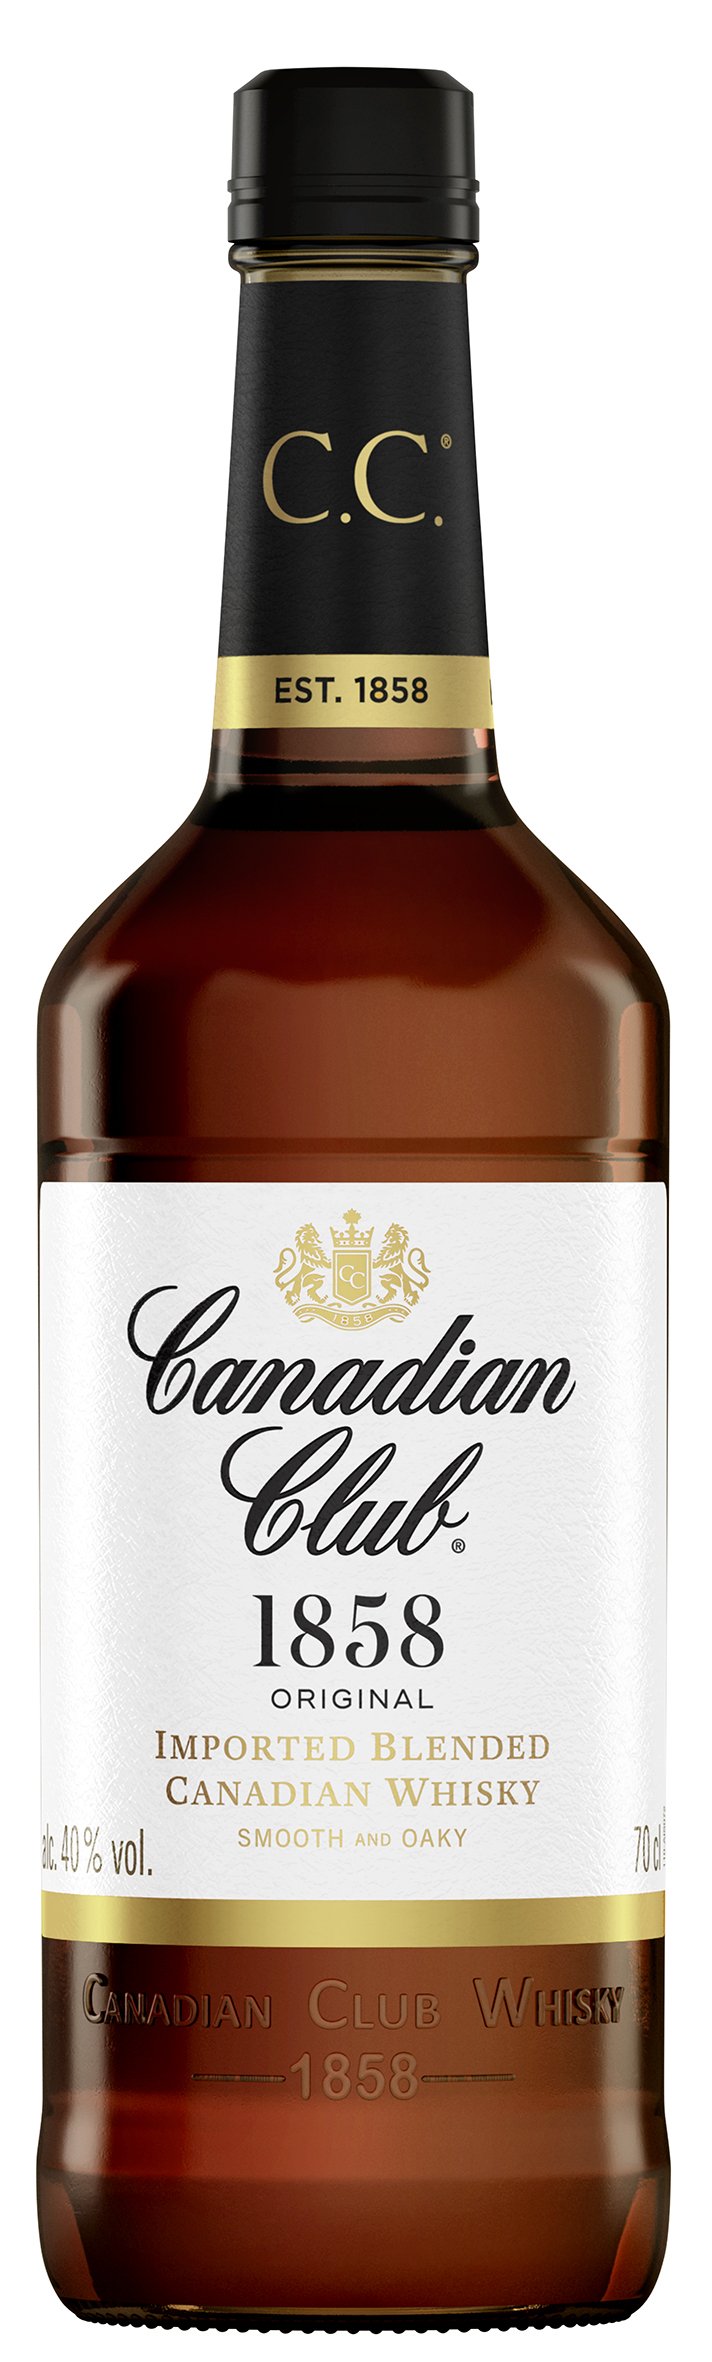 finespirits-Canadian Club Whisky 6 Jahre 40% 0,70l